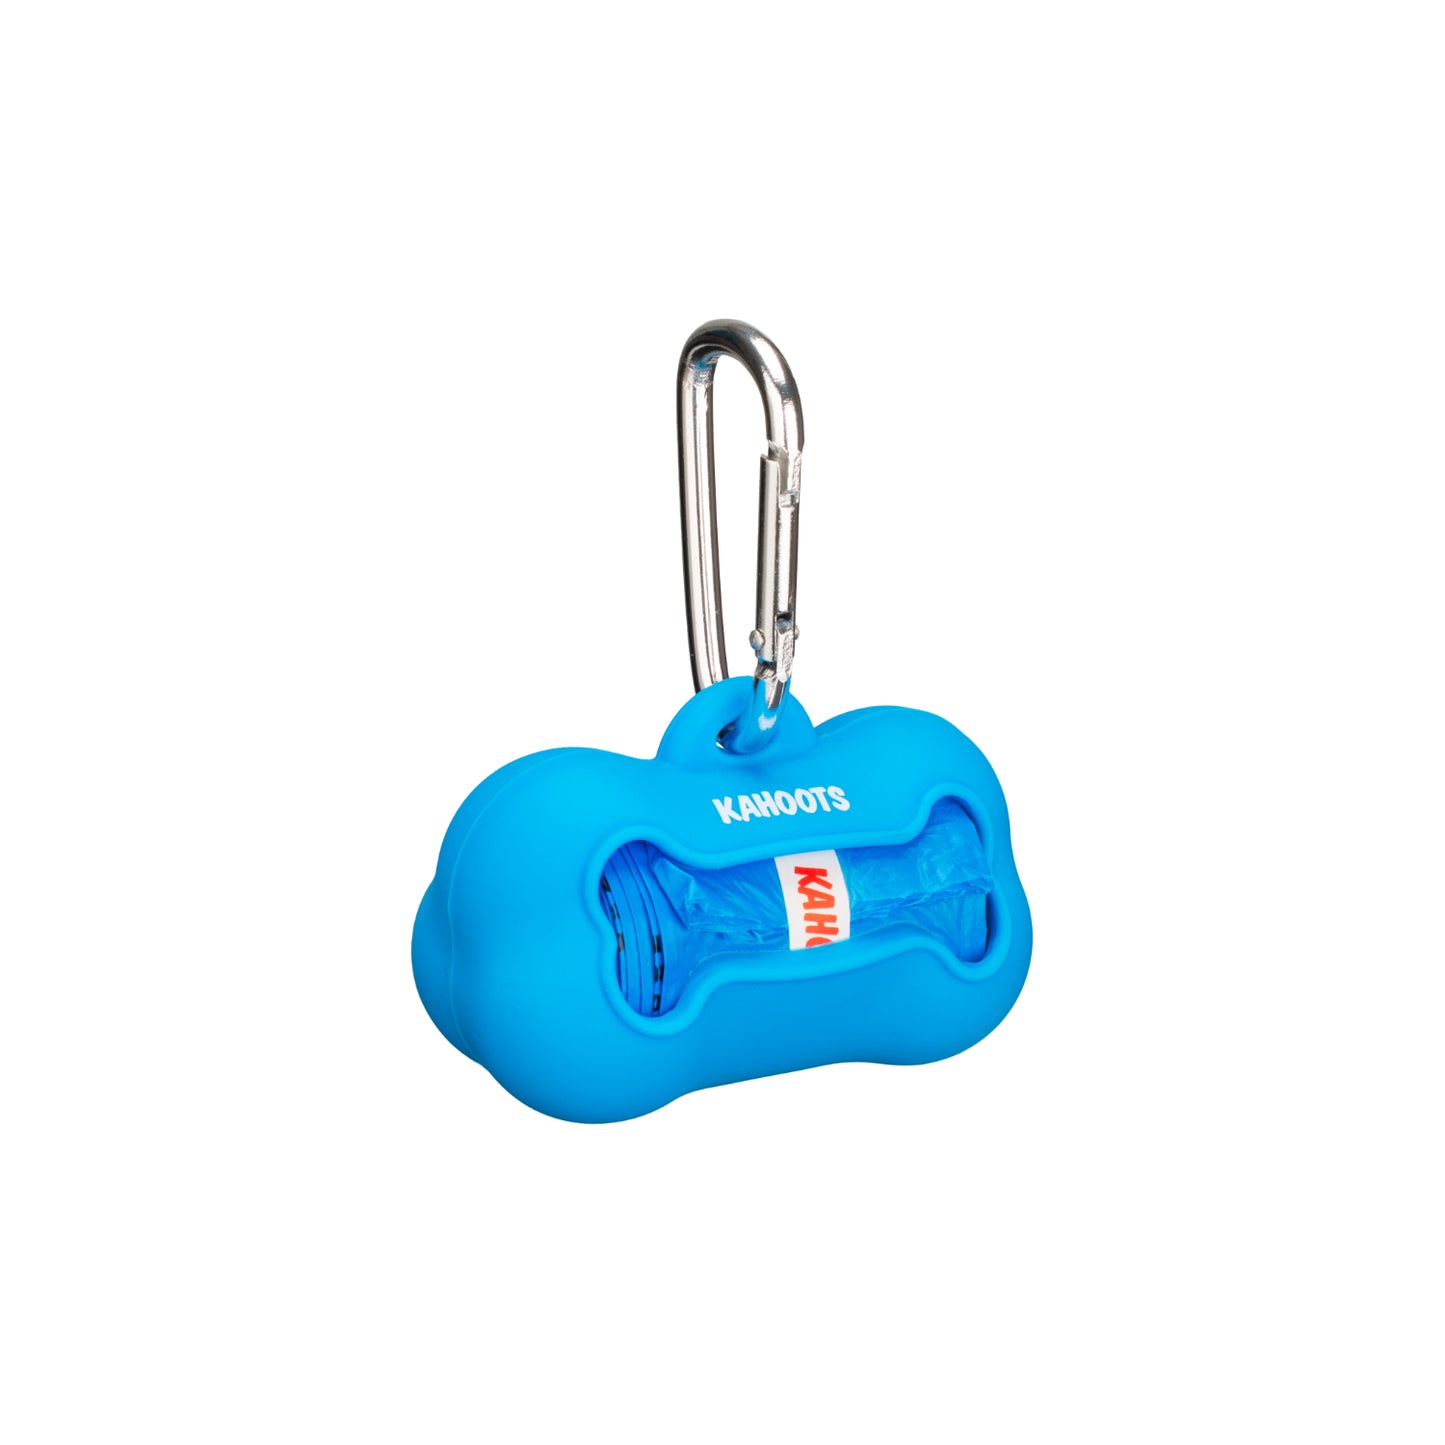 Blue doo bag holder, bone shaped, with blue doo bags inside